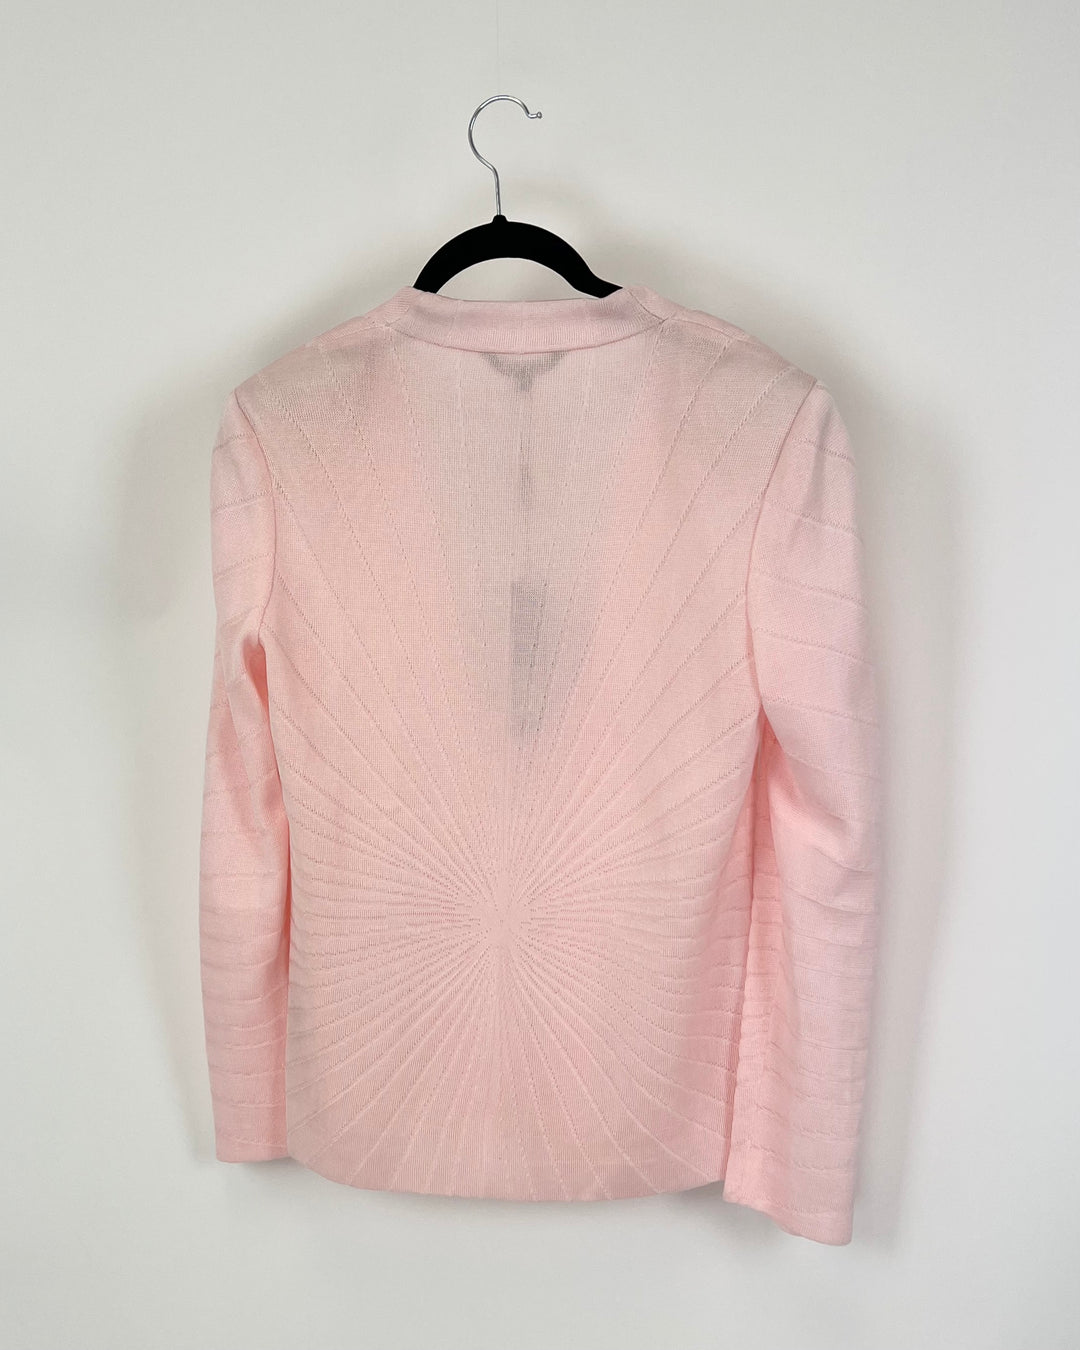 Pink Textured Cardigan - Size 2/4